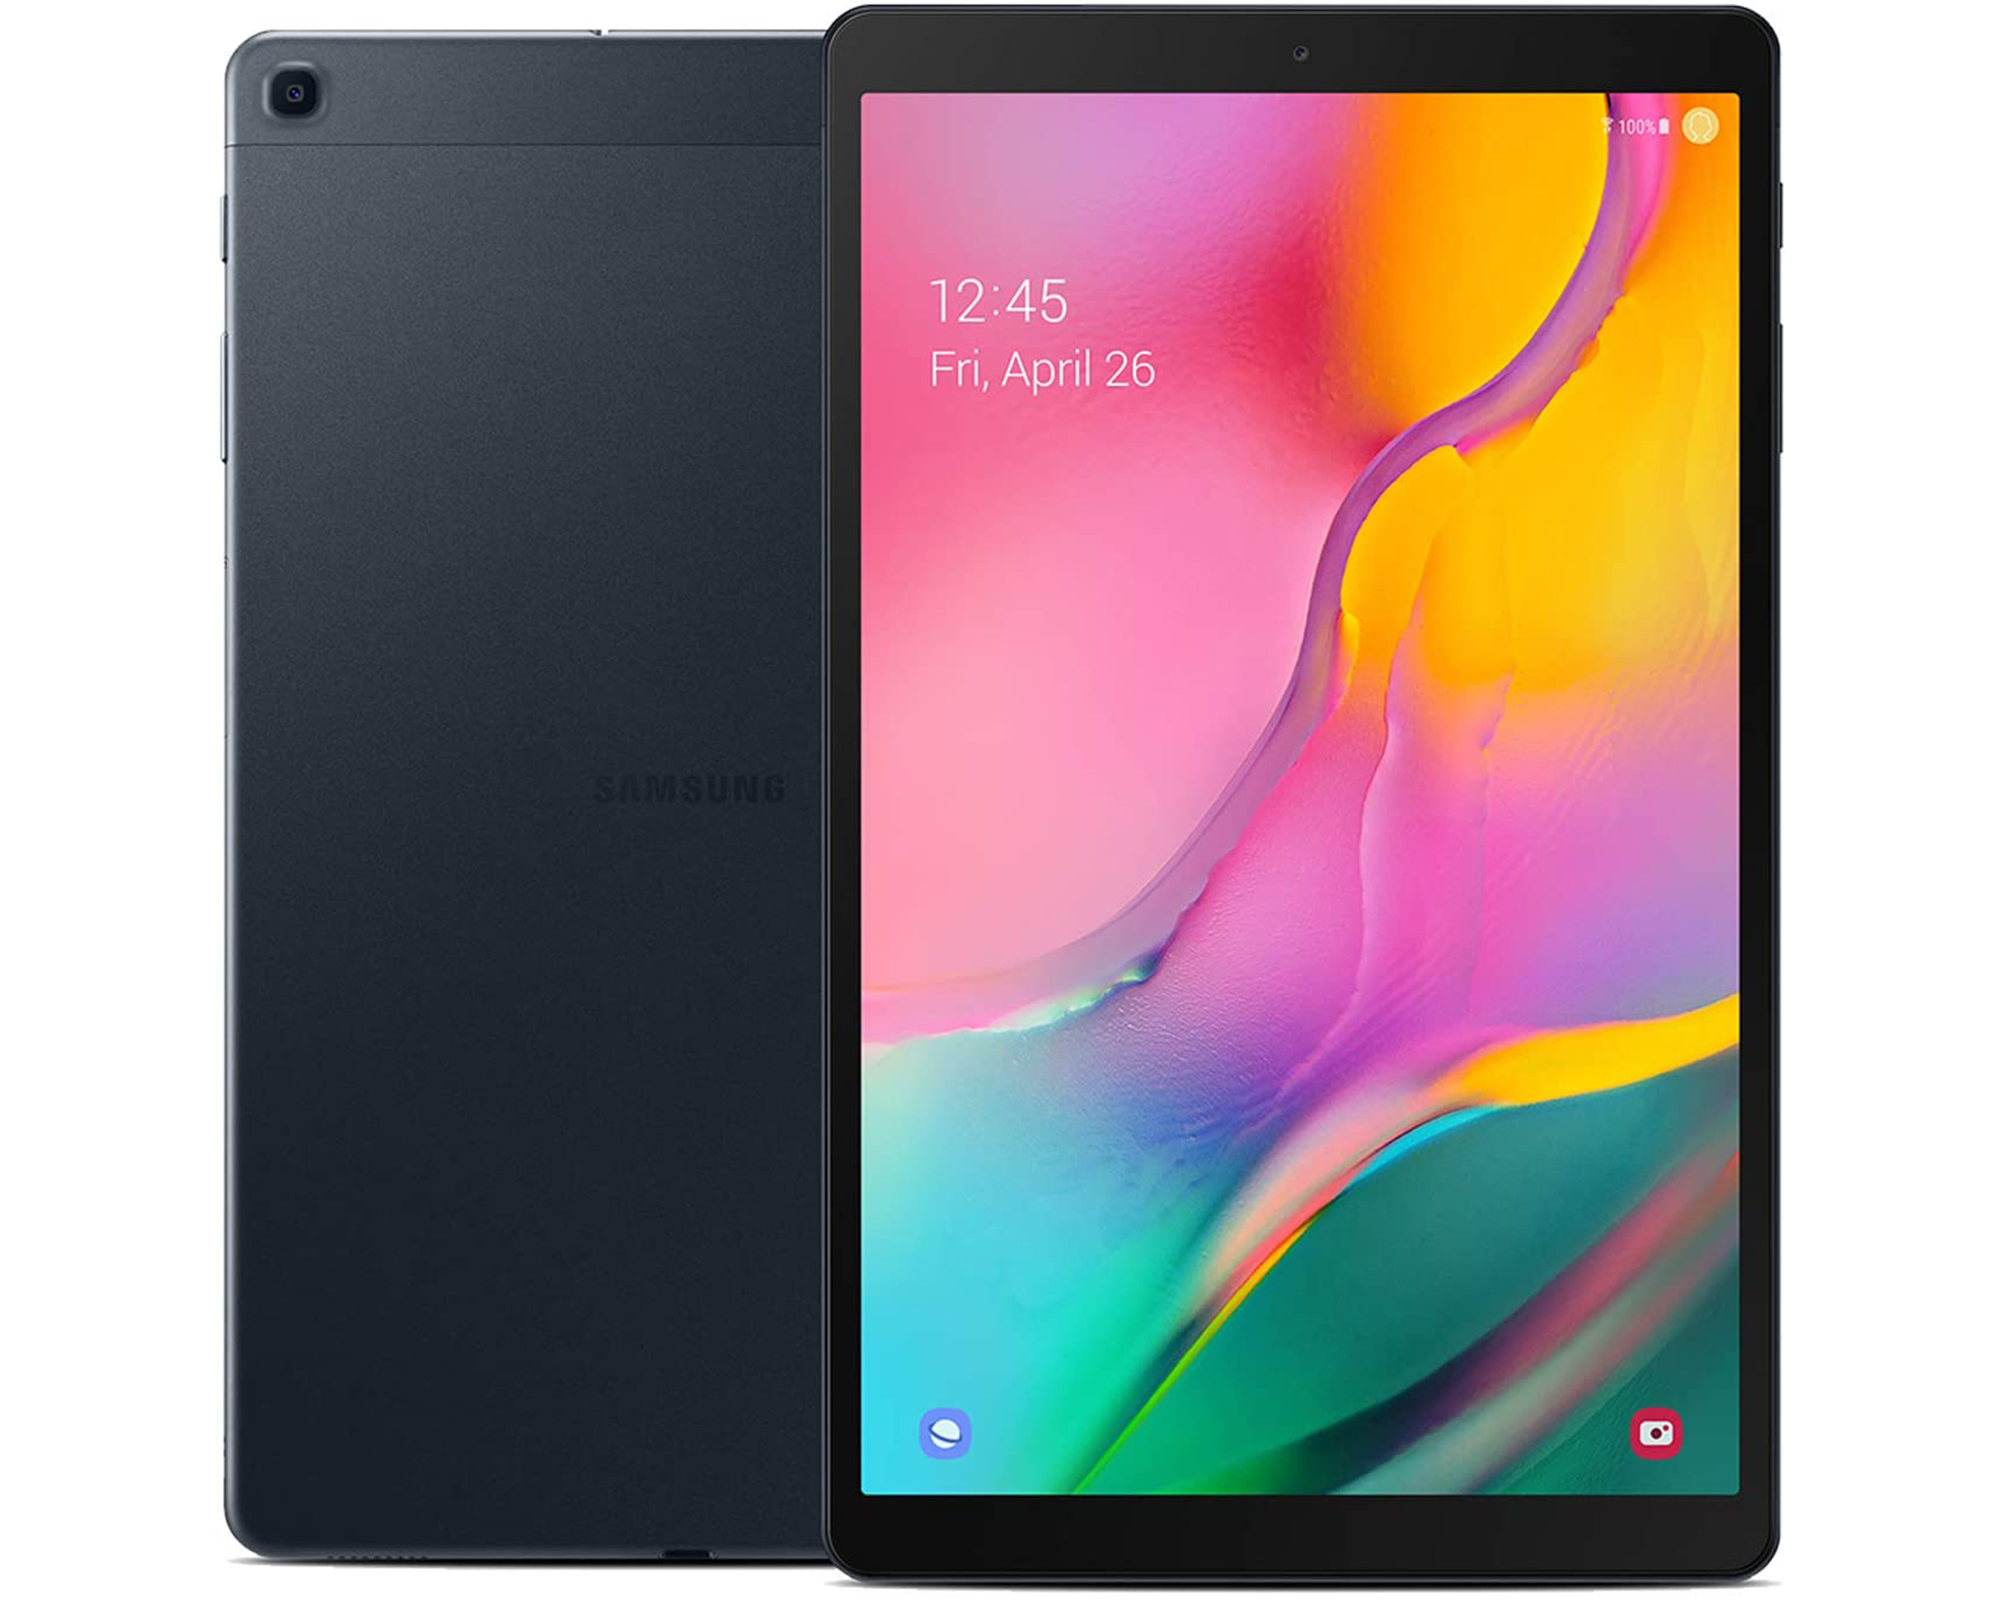 SAMSUNG Galaxy Tab A 10.1" 32GB Tablet, Black - SM-T510NZKAXAR - image 3 of 7